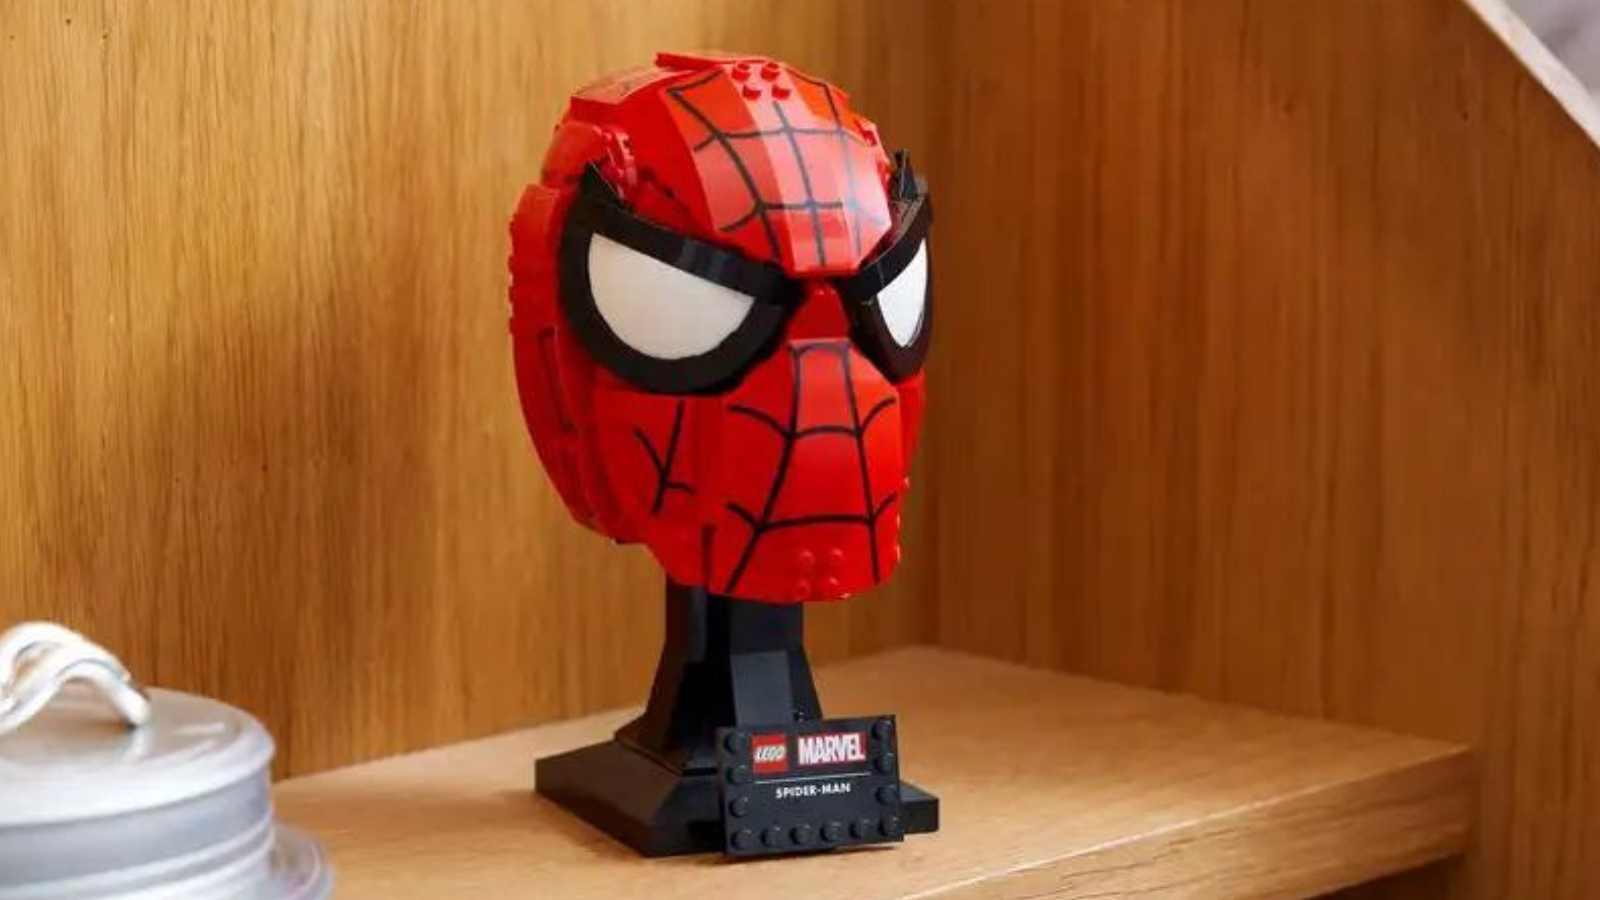 LEGO Marvel Spider-Man’s Mask on display